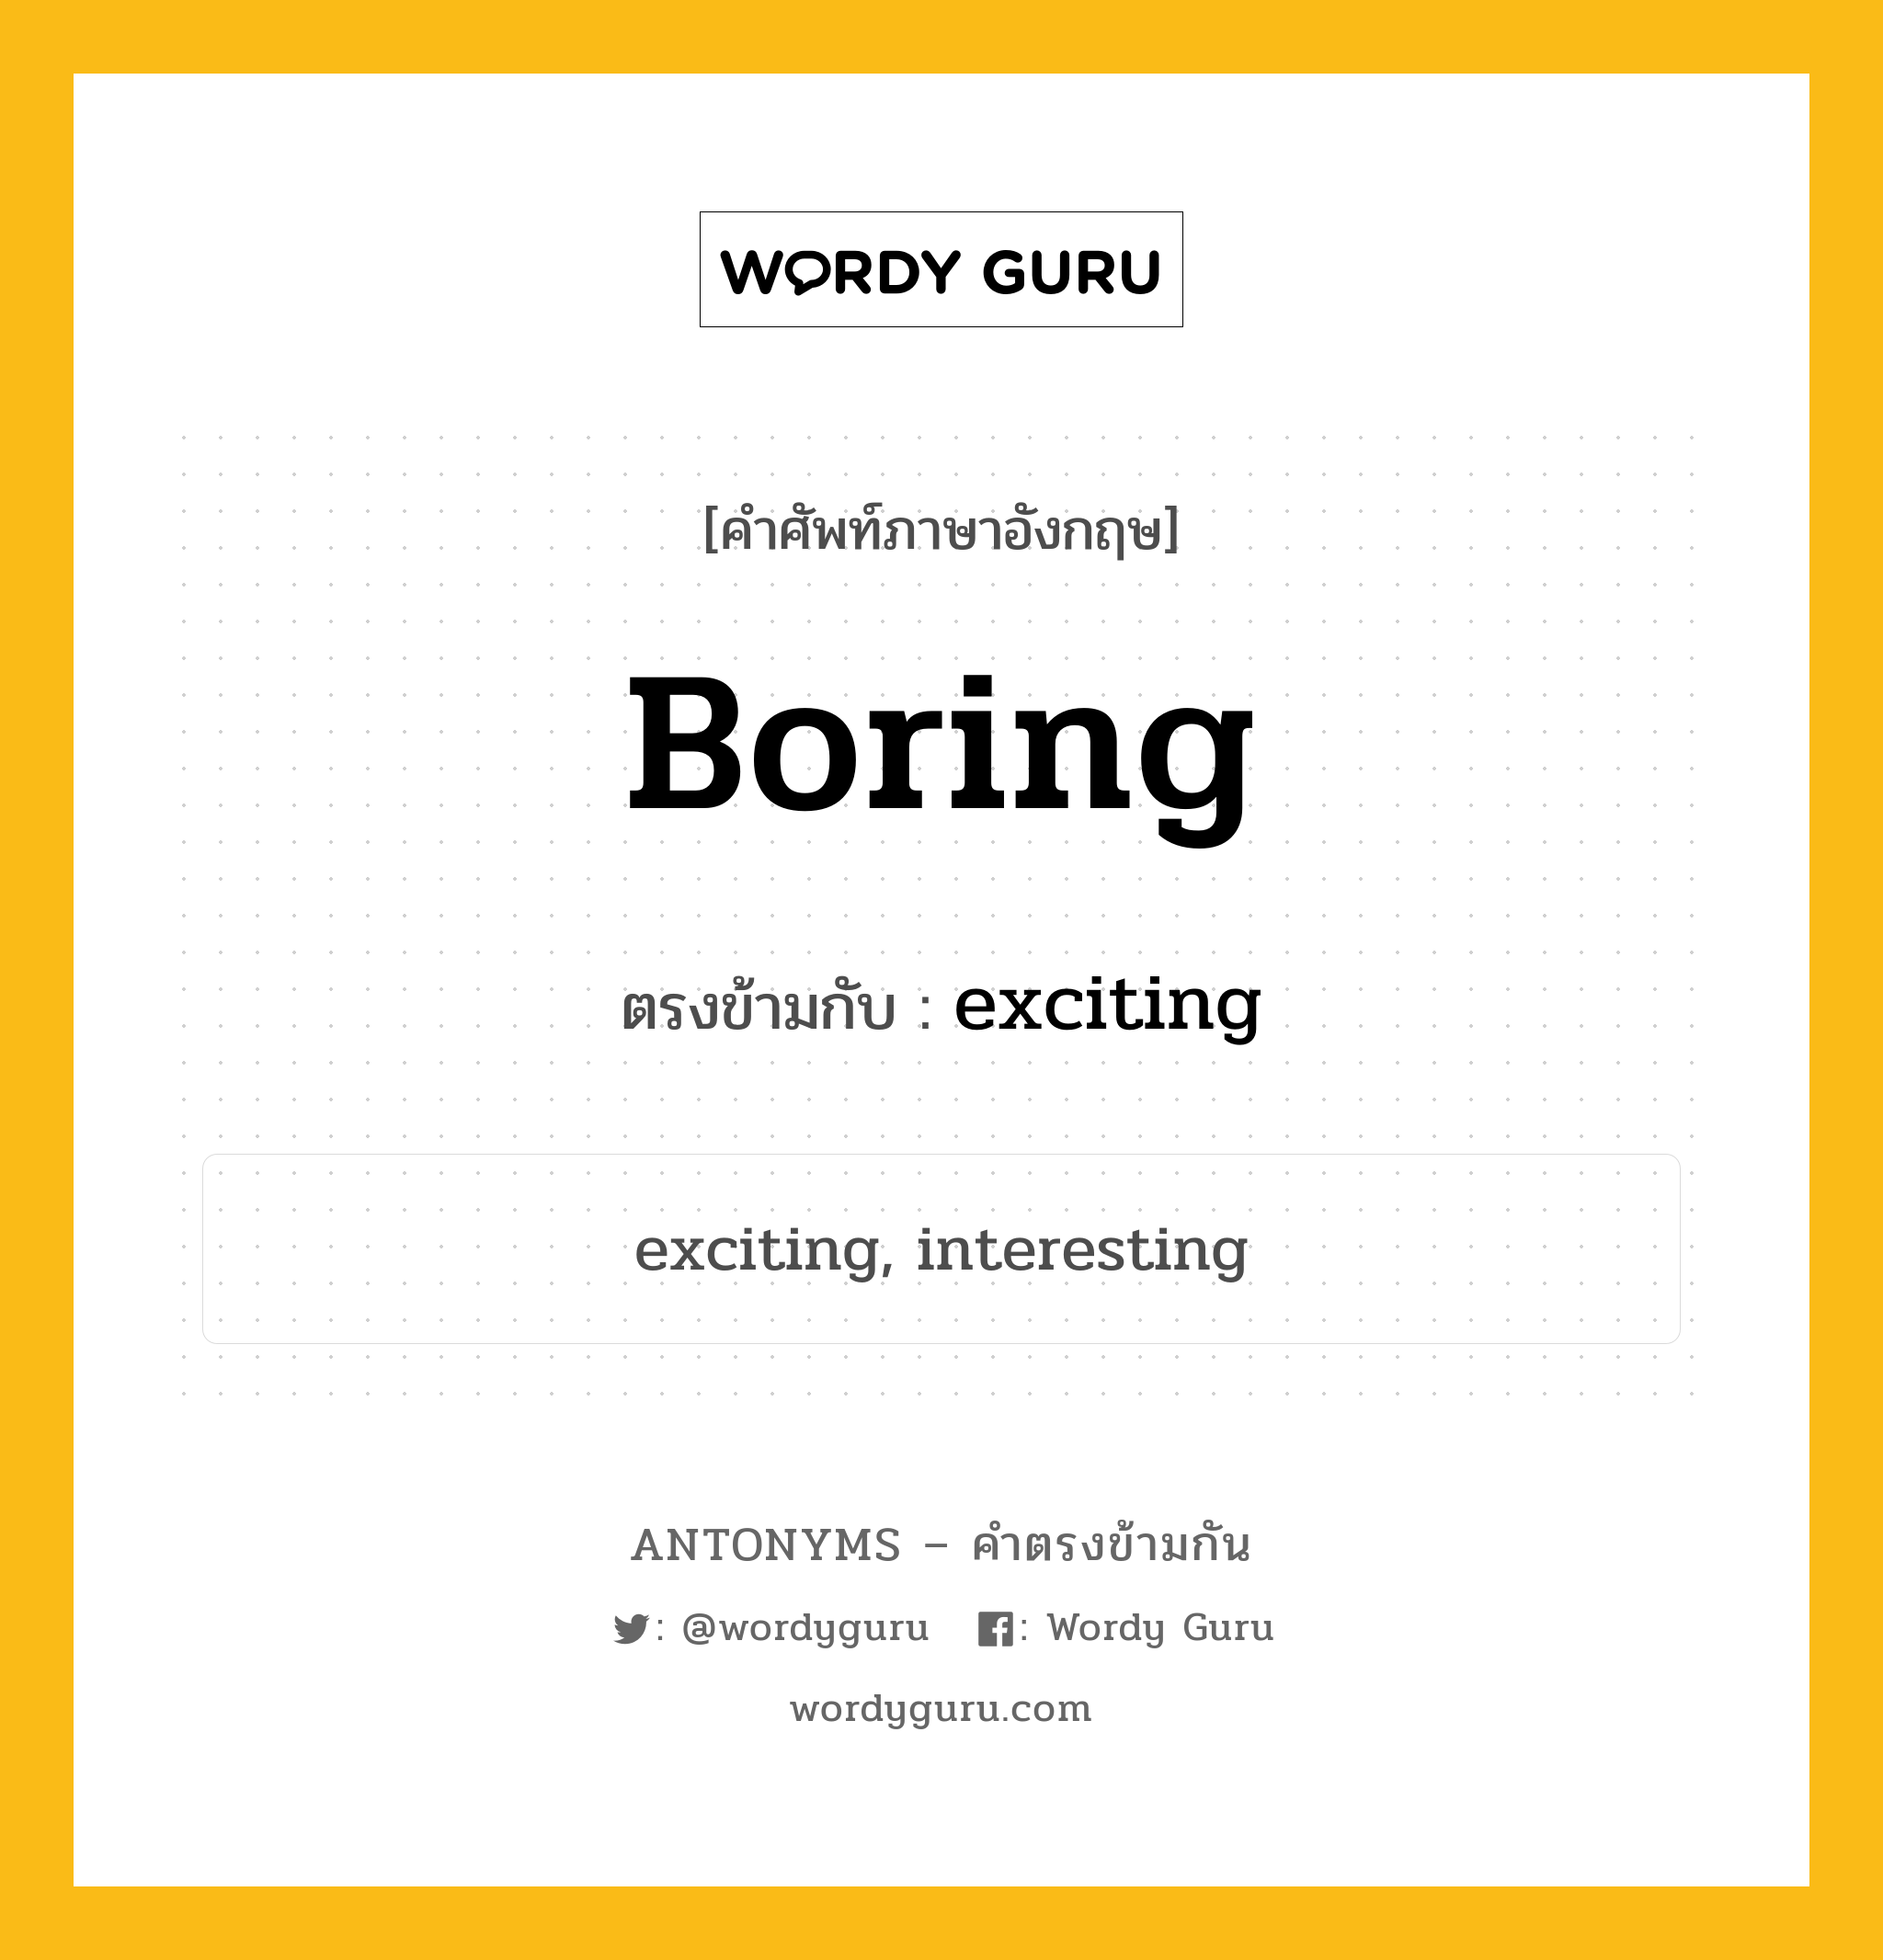 boring เป็นคำตรงข้ามกับคำไหนบ้าง?, คำศัพท์ภาษาอังกฤษ boring ตรงข้ามกับ exciting หมวด exciting